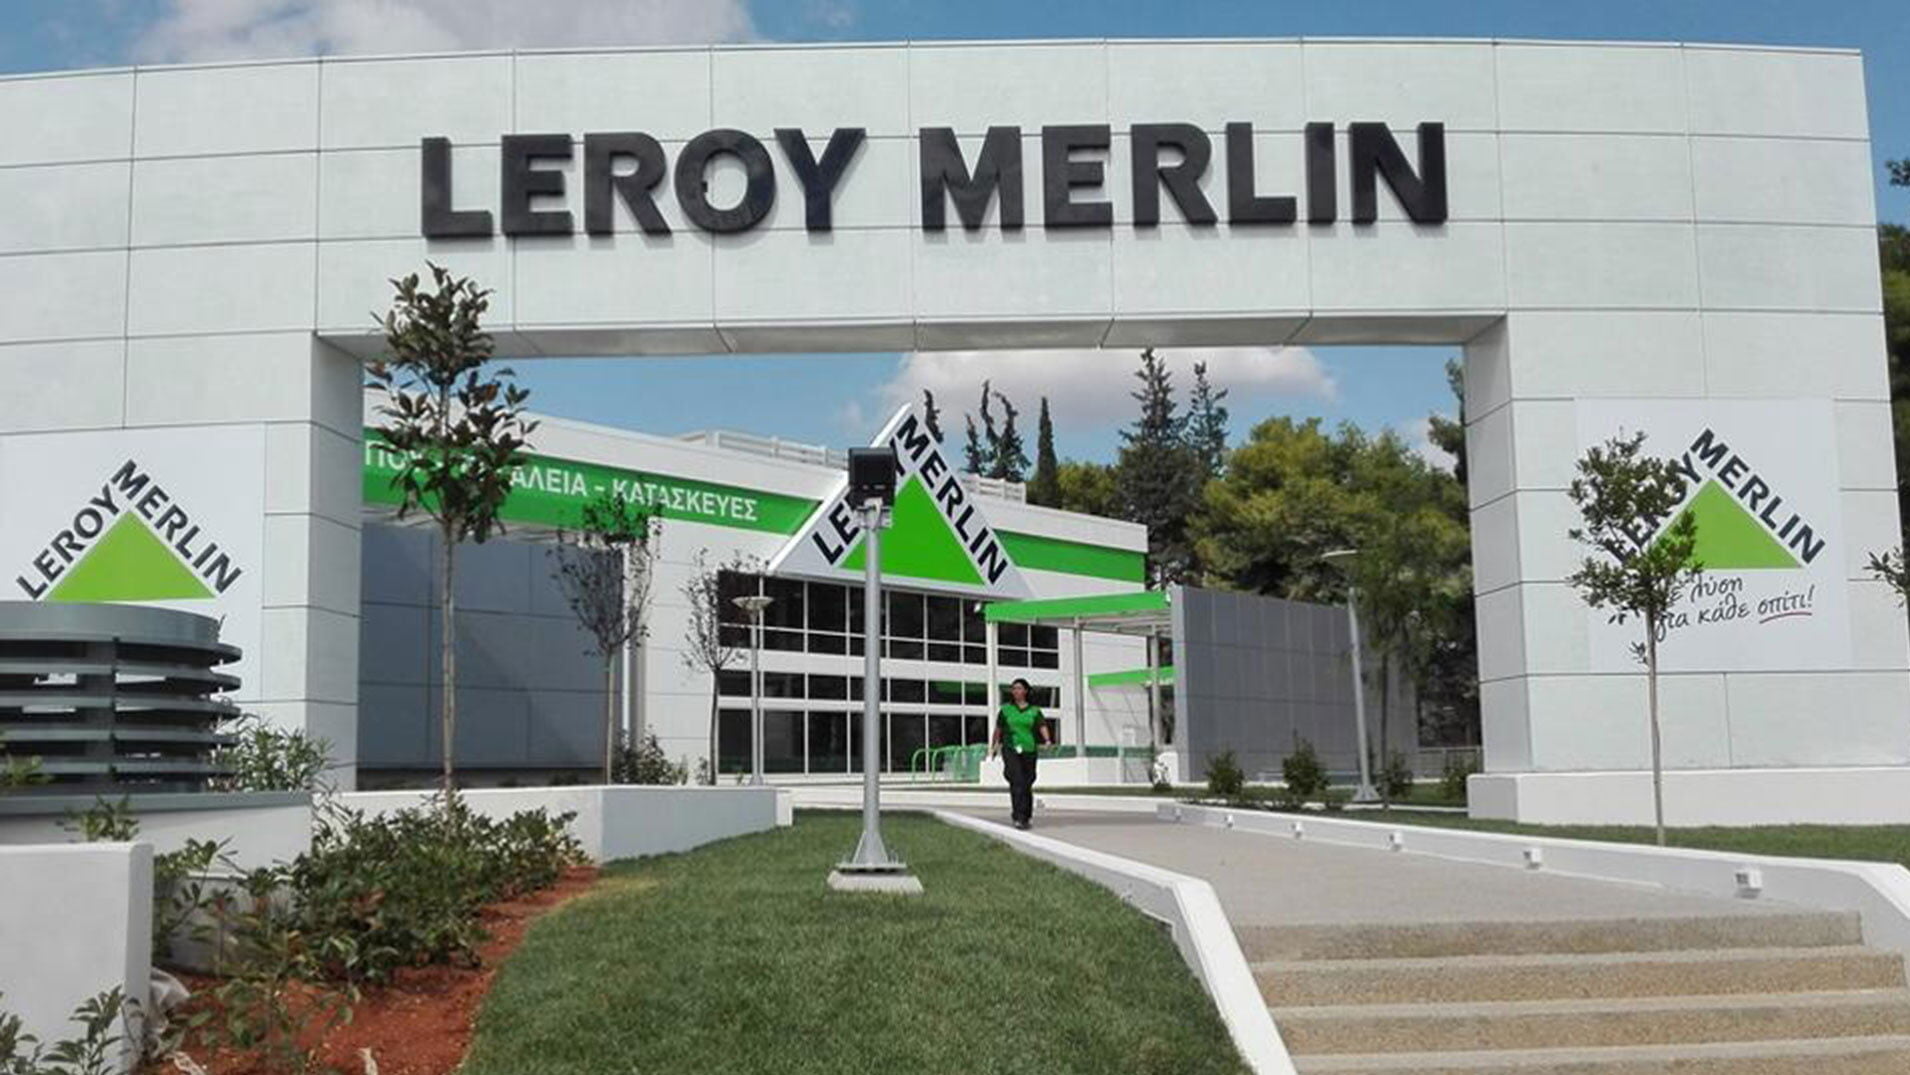 Leroy Merlin: Ζητείται προσωπικό πέντε ειδικοτήτων